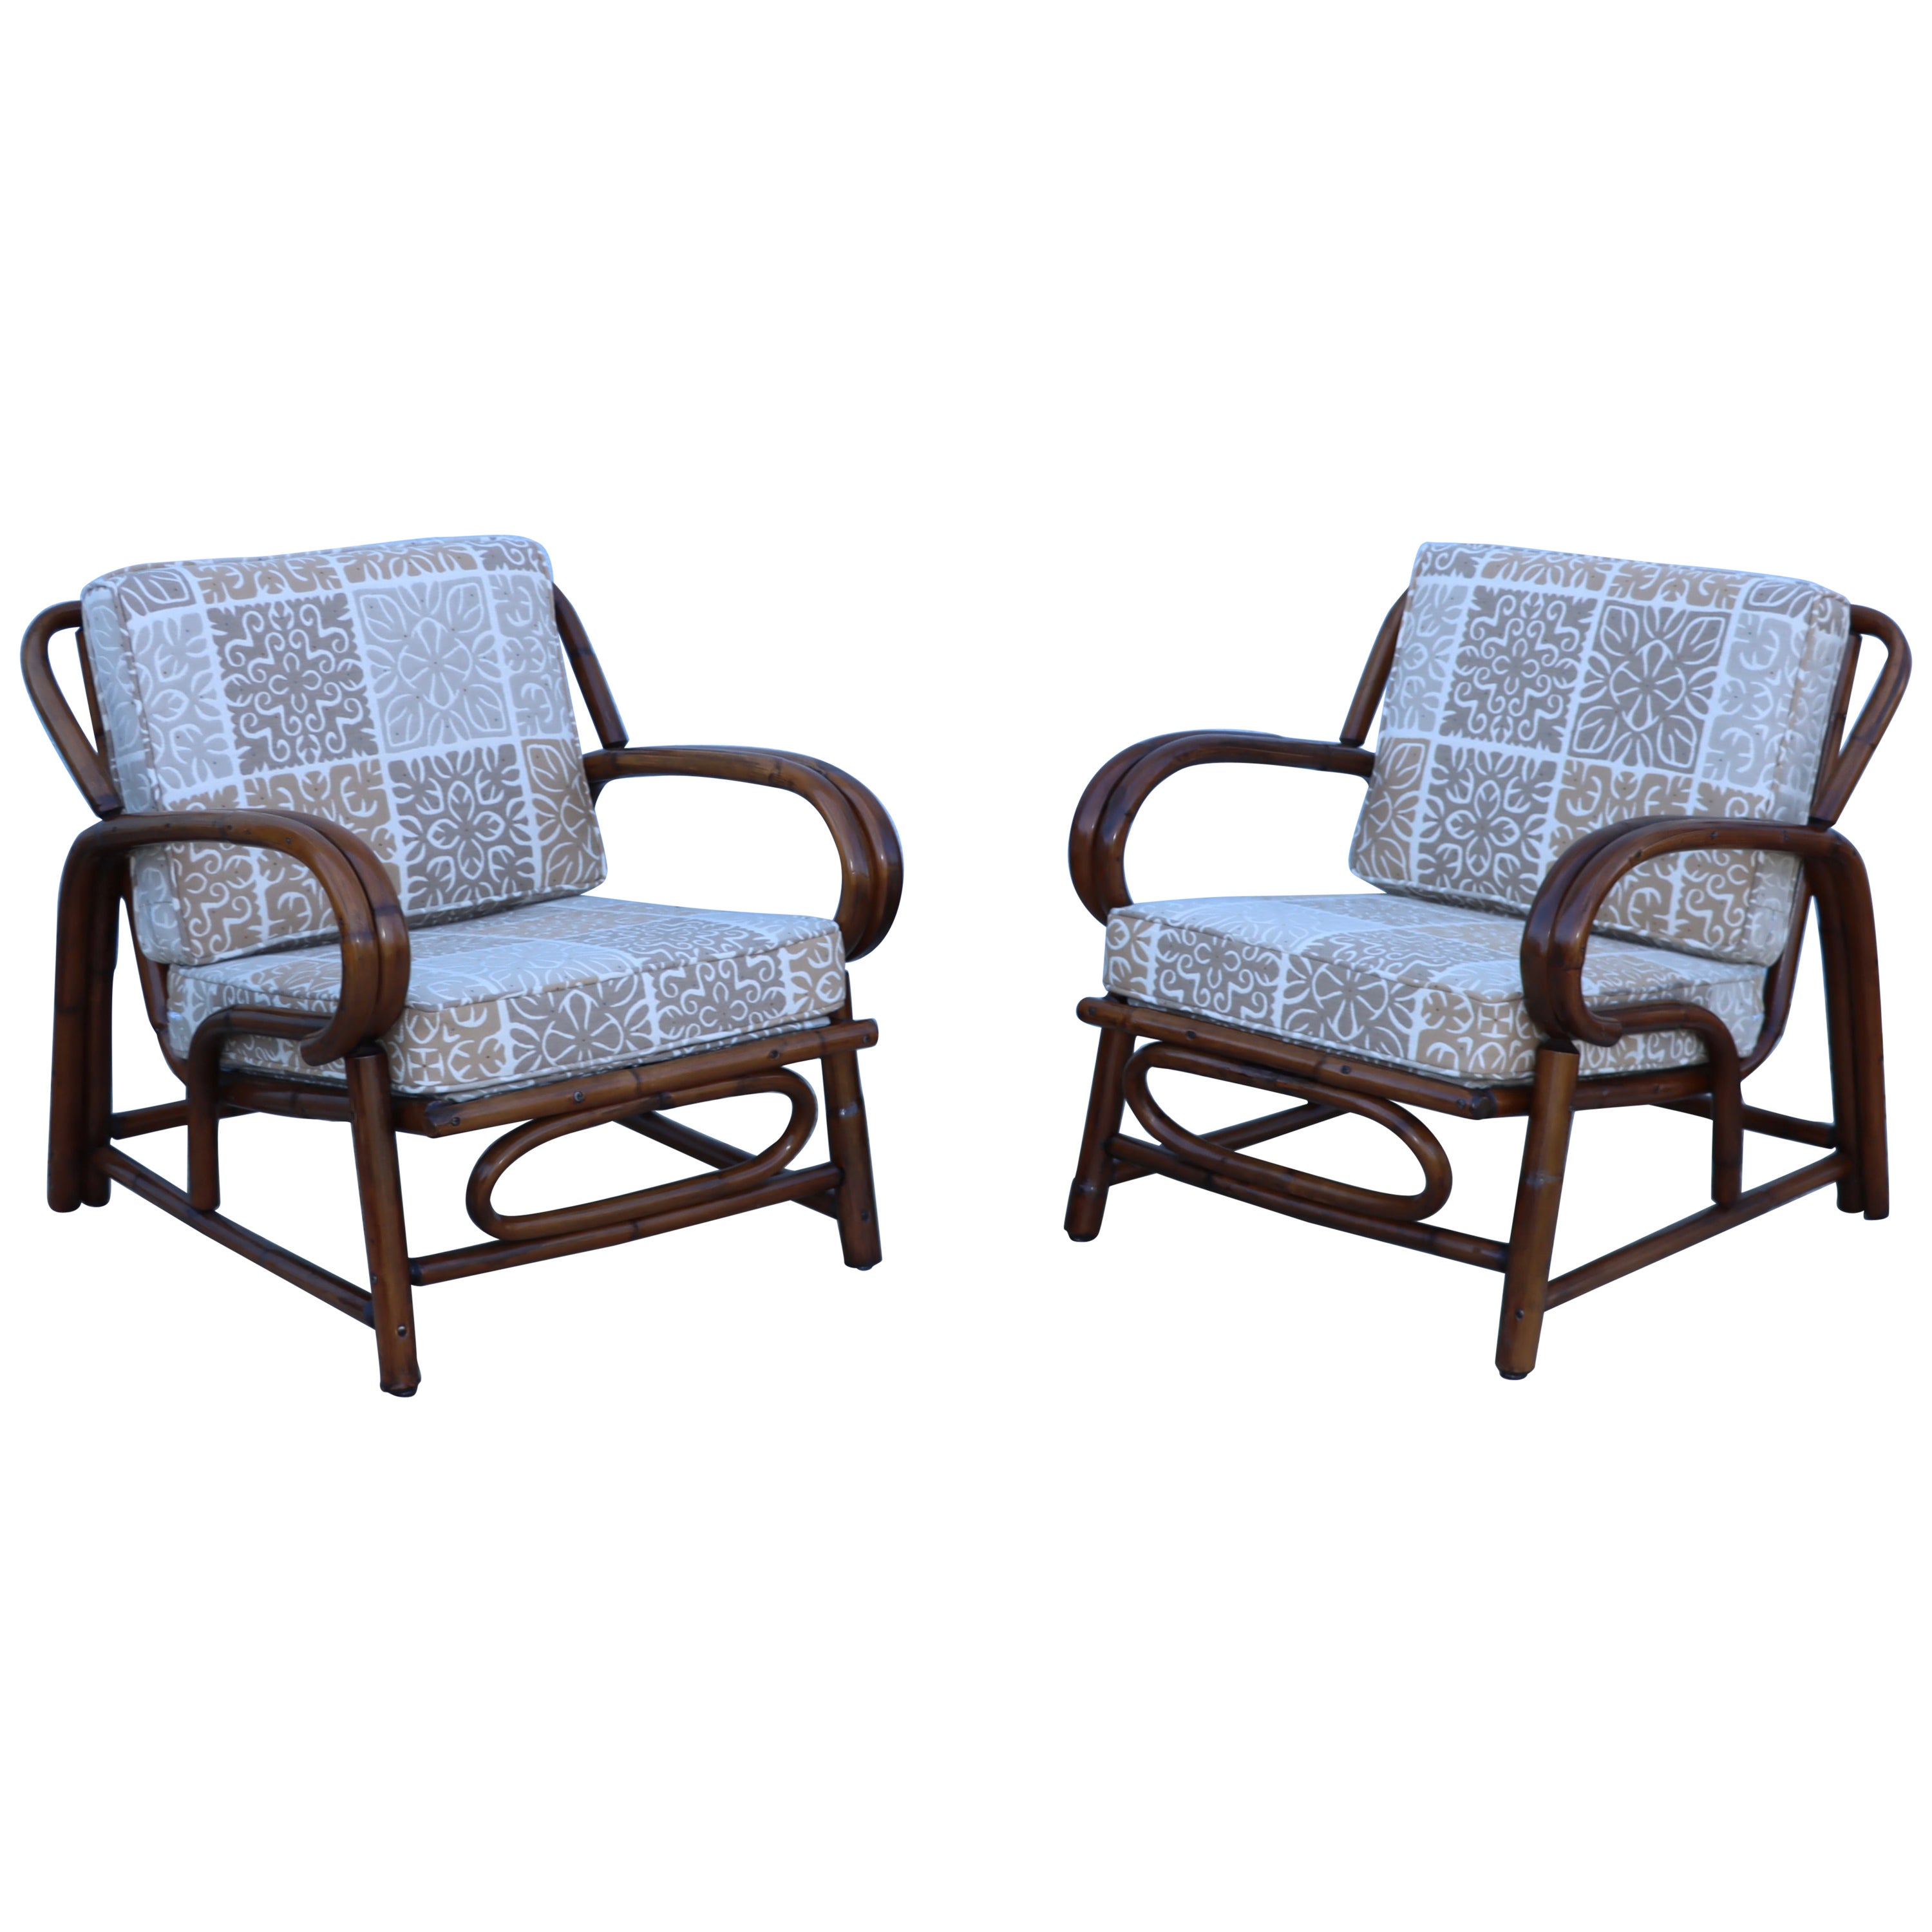 1960s Rattan Lounge Chairs